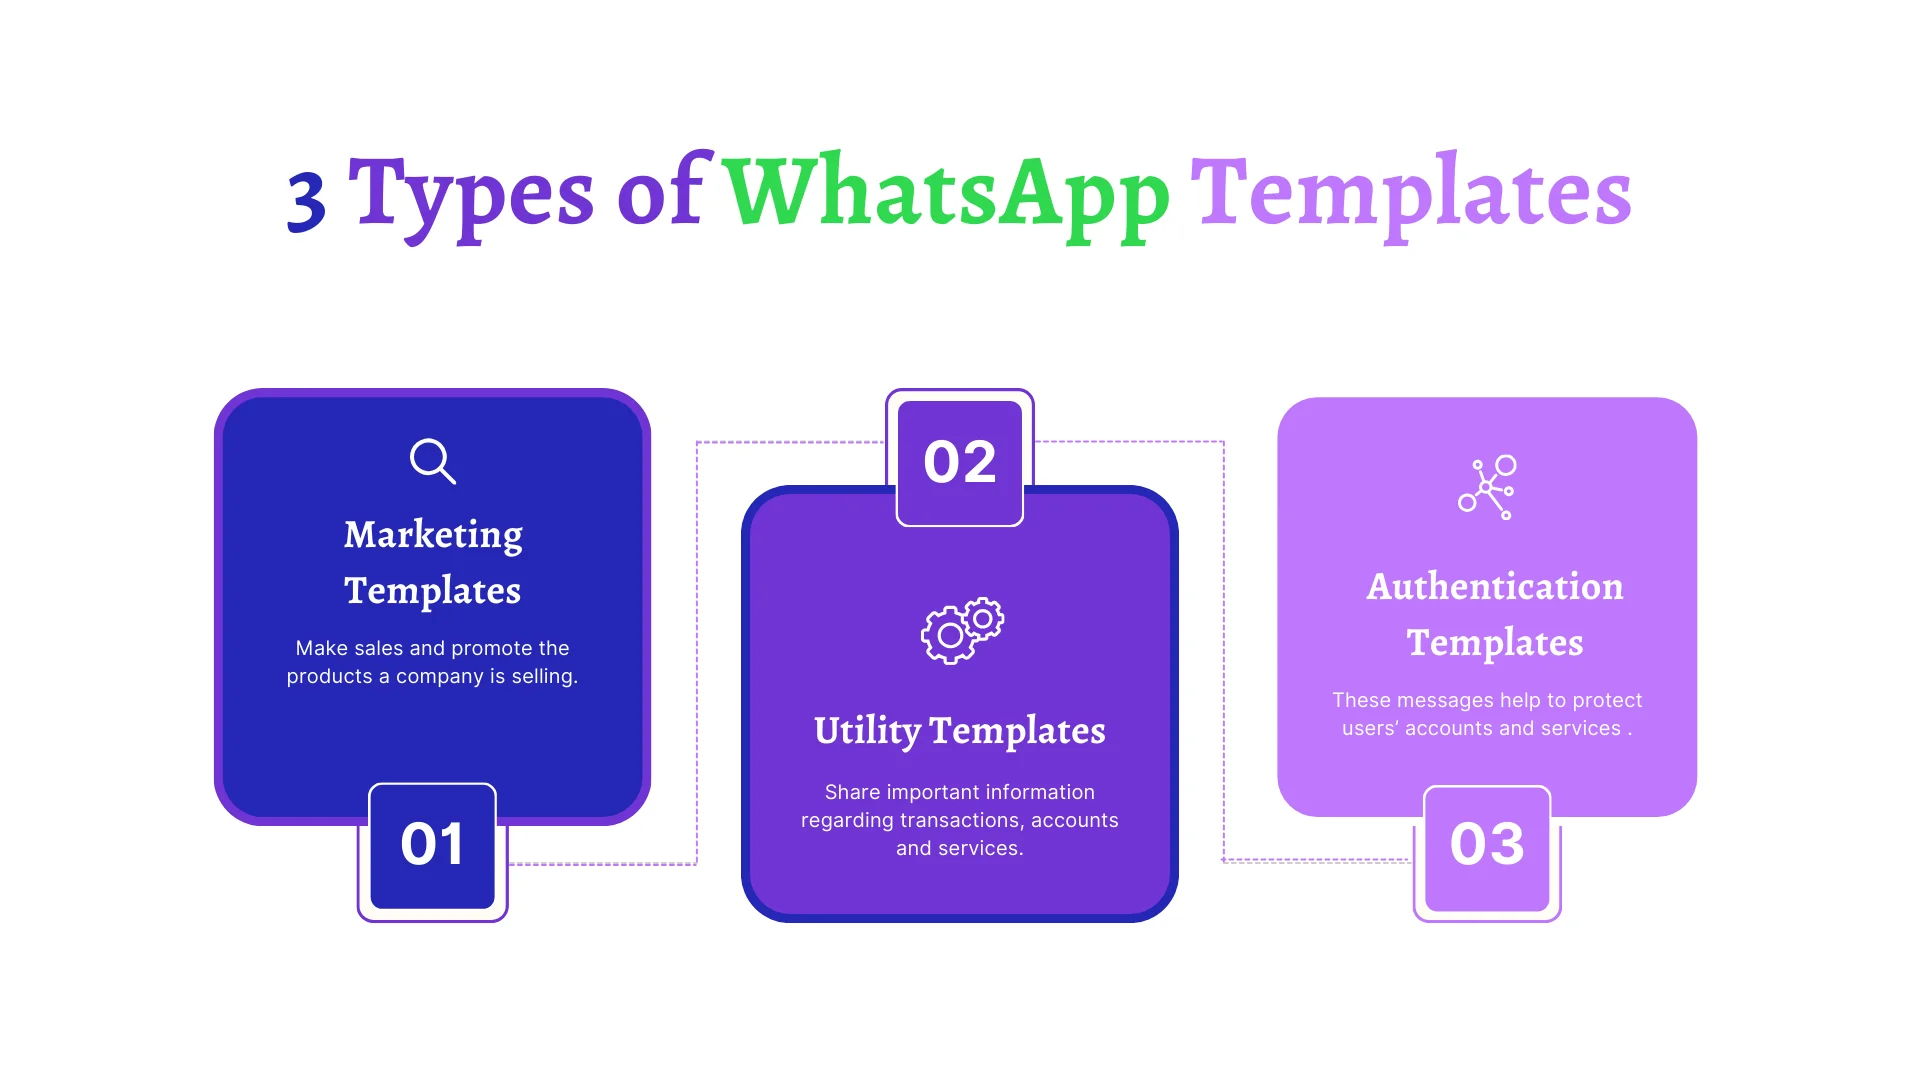 Types of WhatsApp Templates